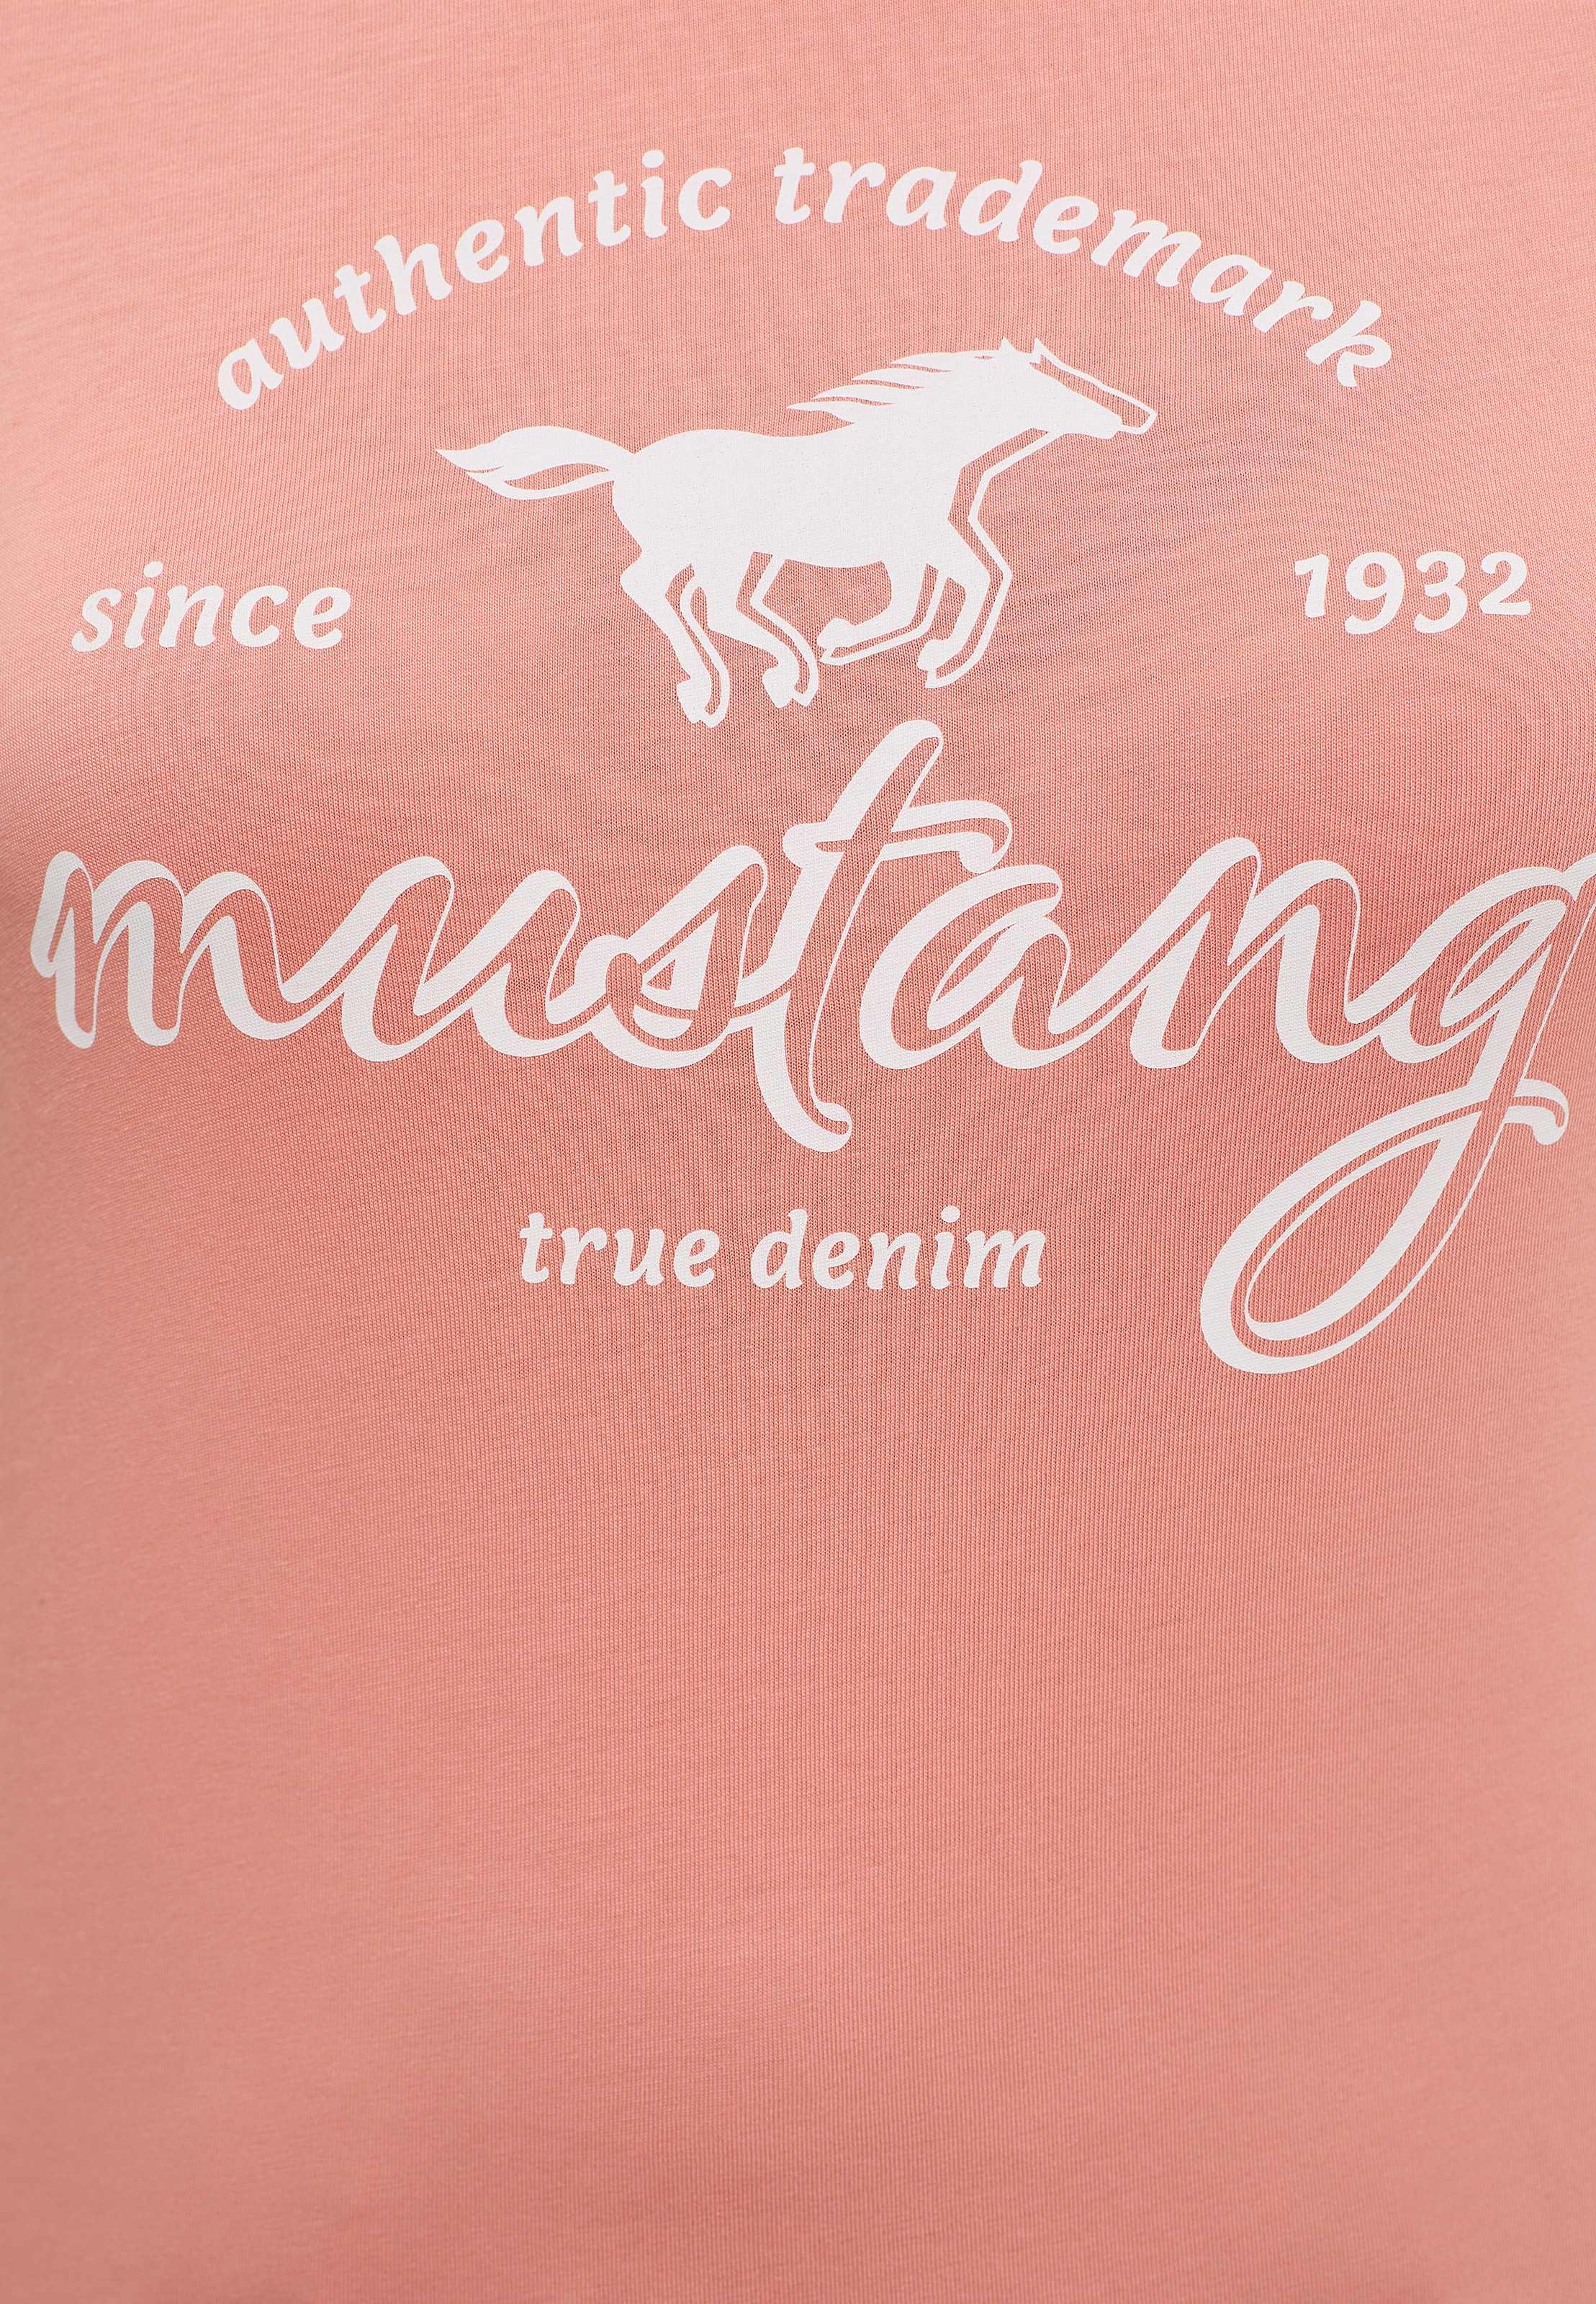 MUSTANG T-Shirt »Alexia C Print« bei ♕